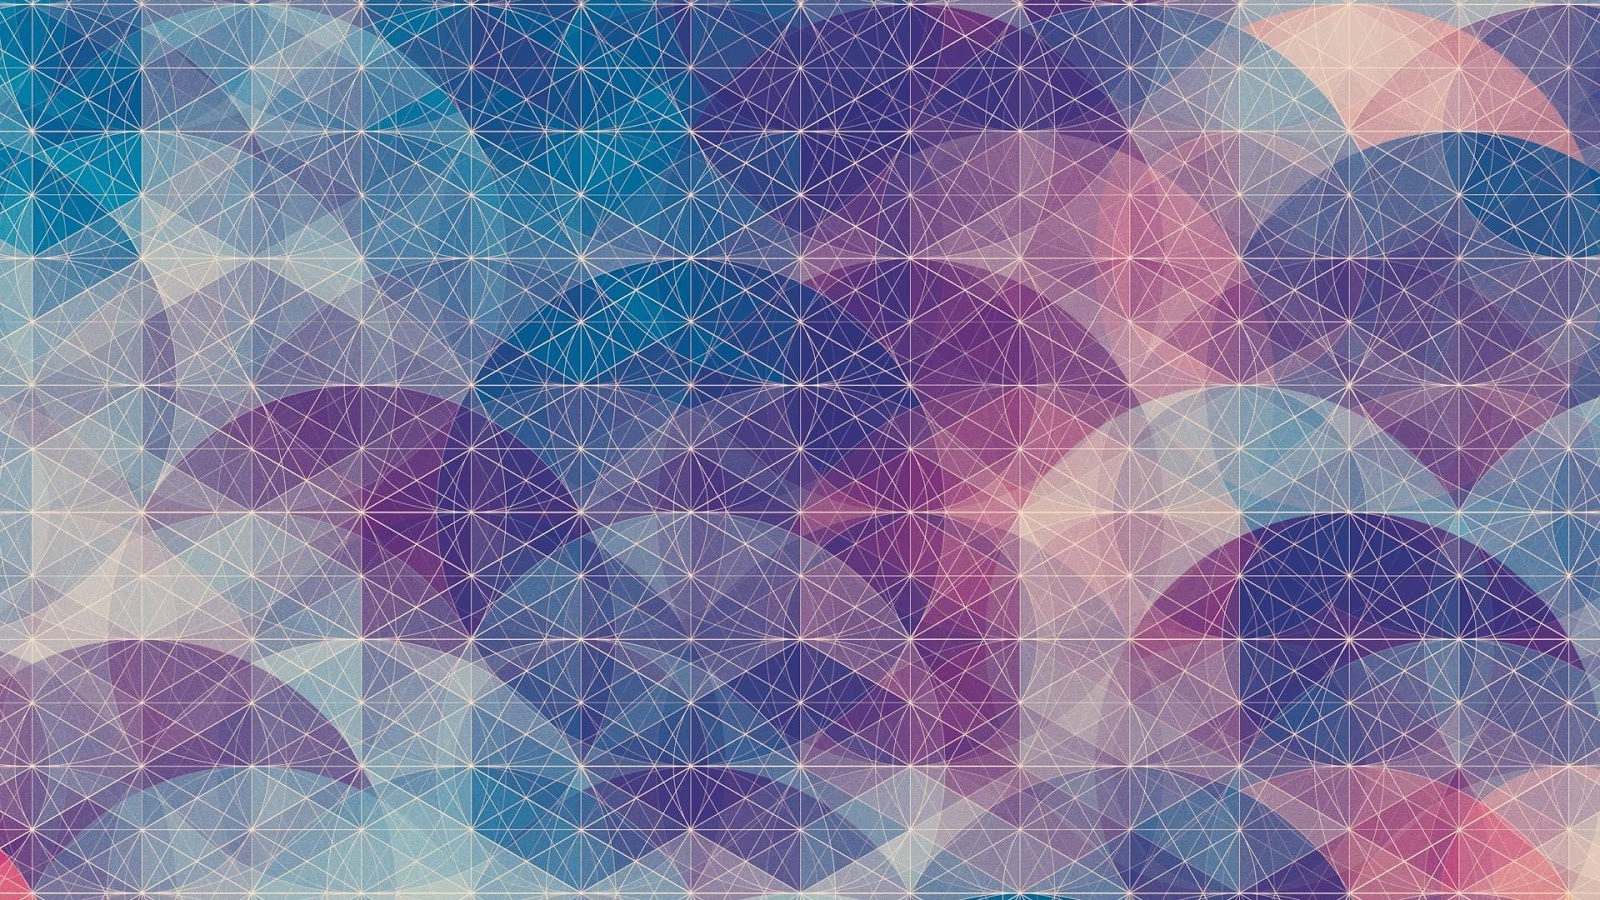 Geometric Patterns Wallpaper HD Wallpapers on picsfaircom 1600x900